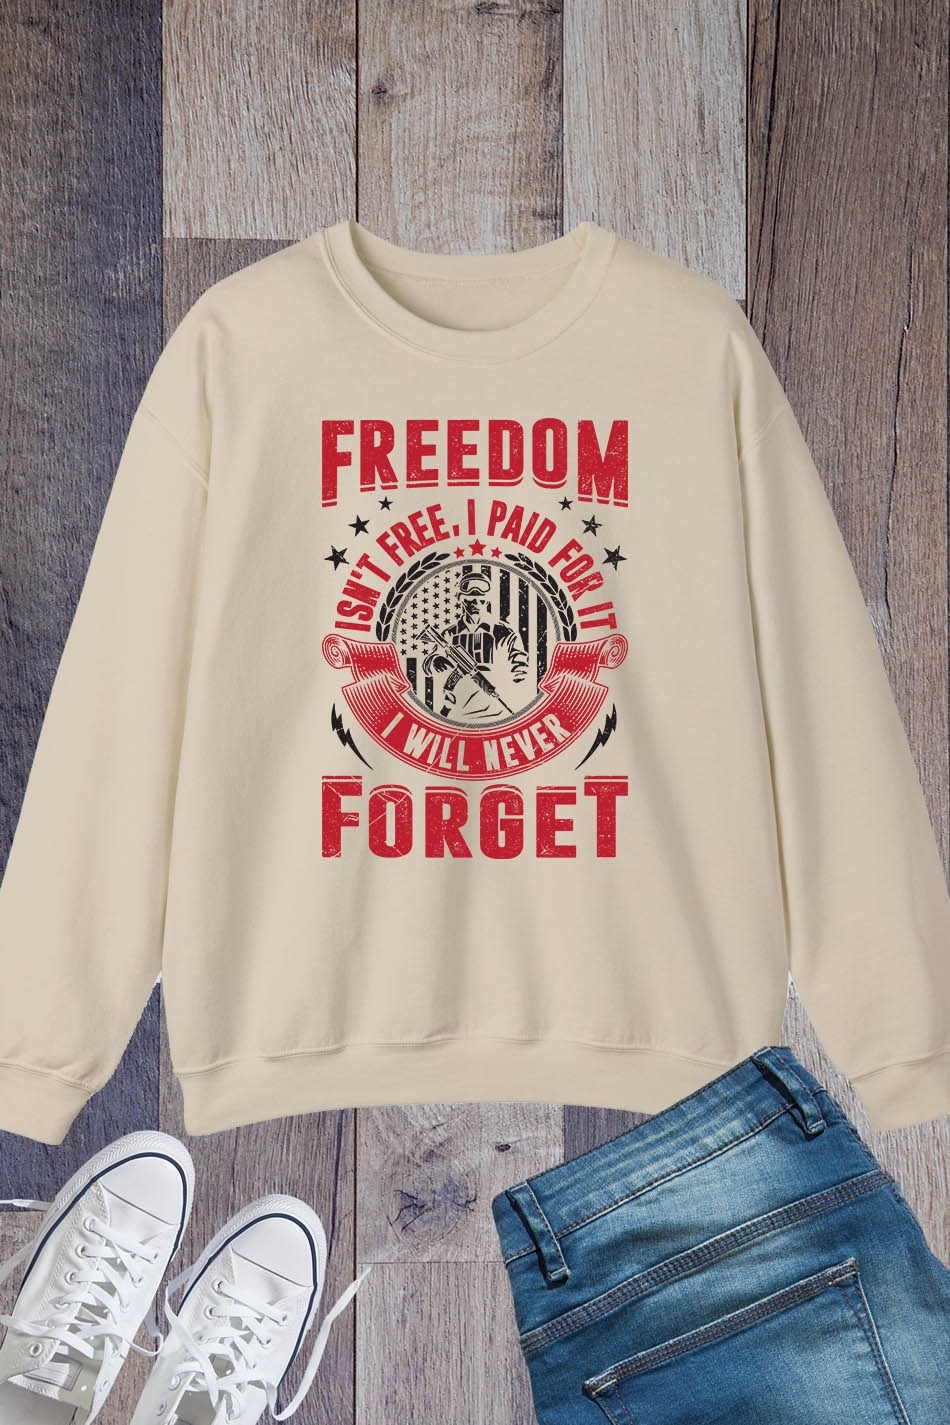 Freedom Isn't Free I Paid For it Sweatshirt